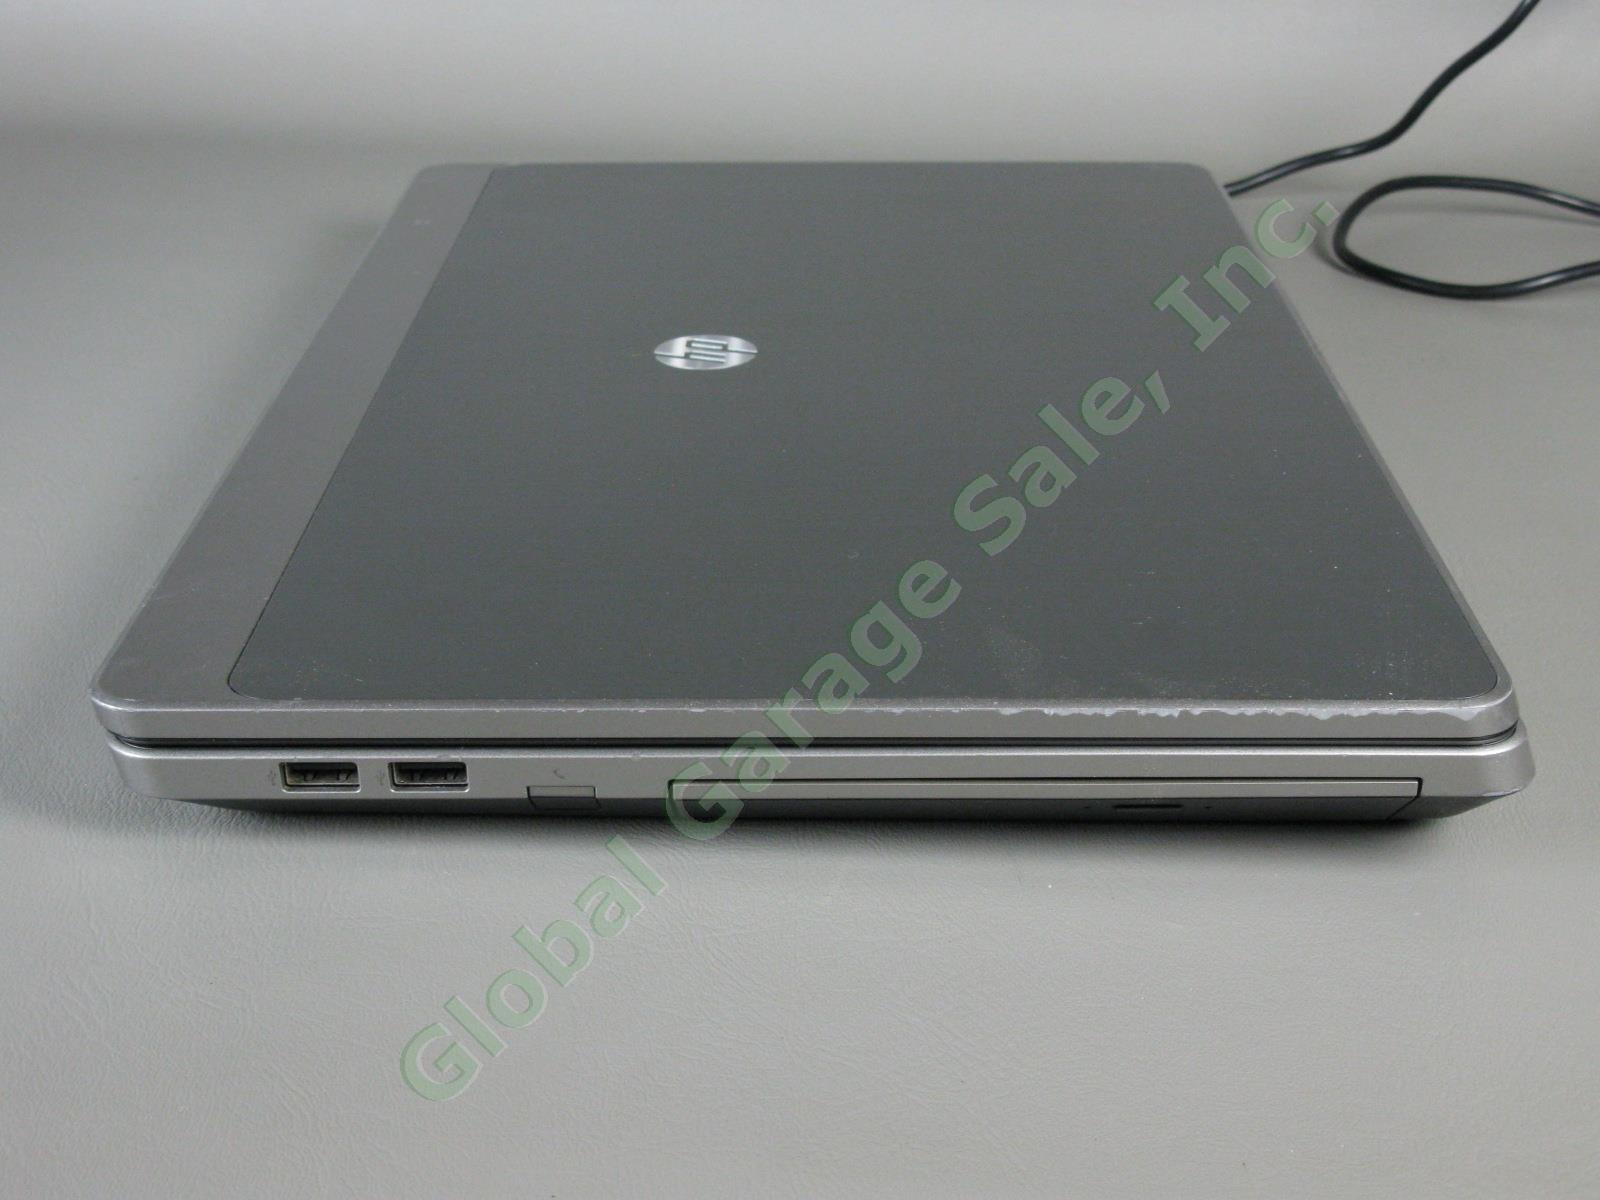 HP ProBook 4530s Laptop Computer Intel i5 2.30GHz 300GB HDD 2GB RAM Win 10 Pro 3